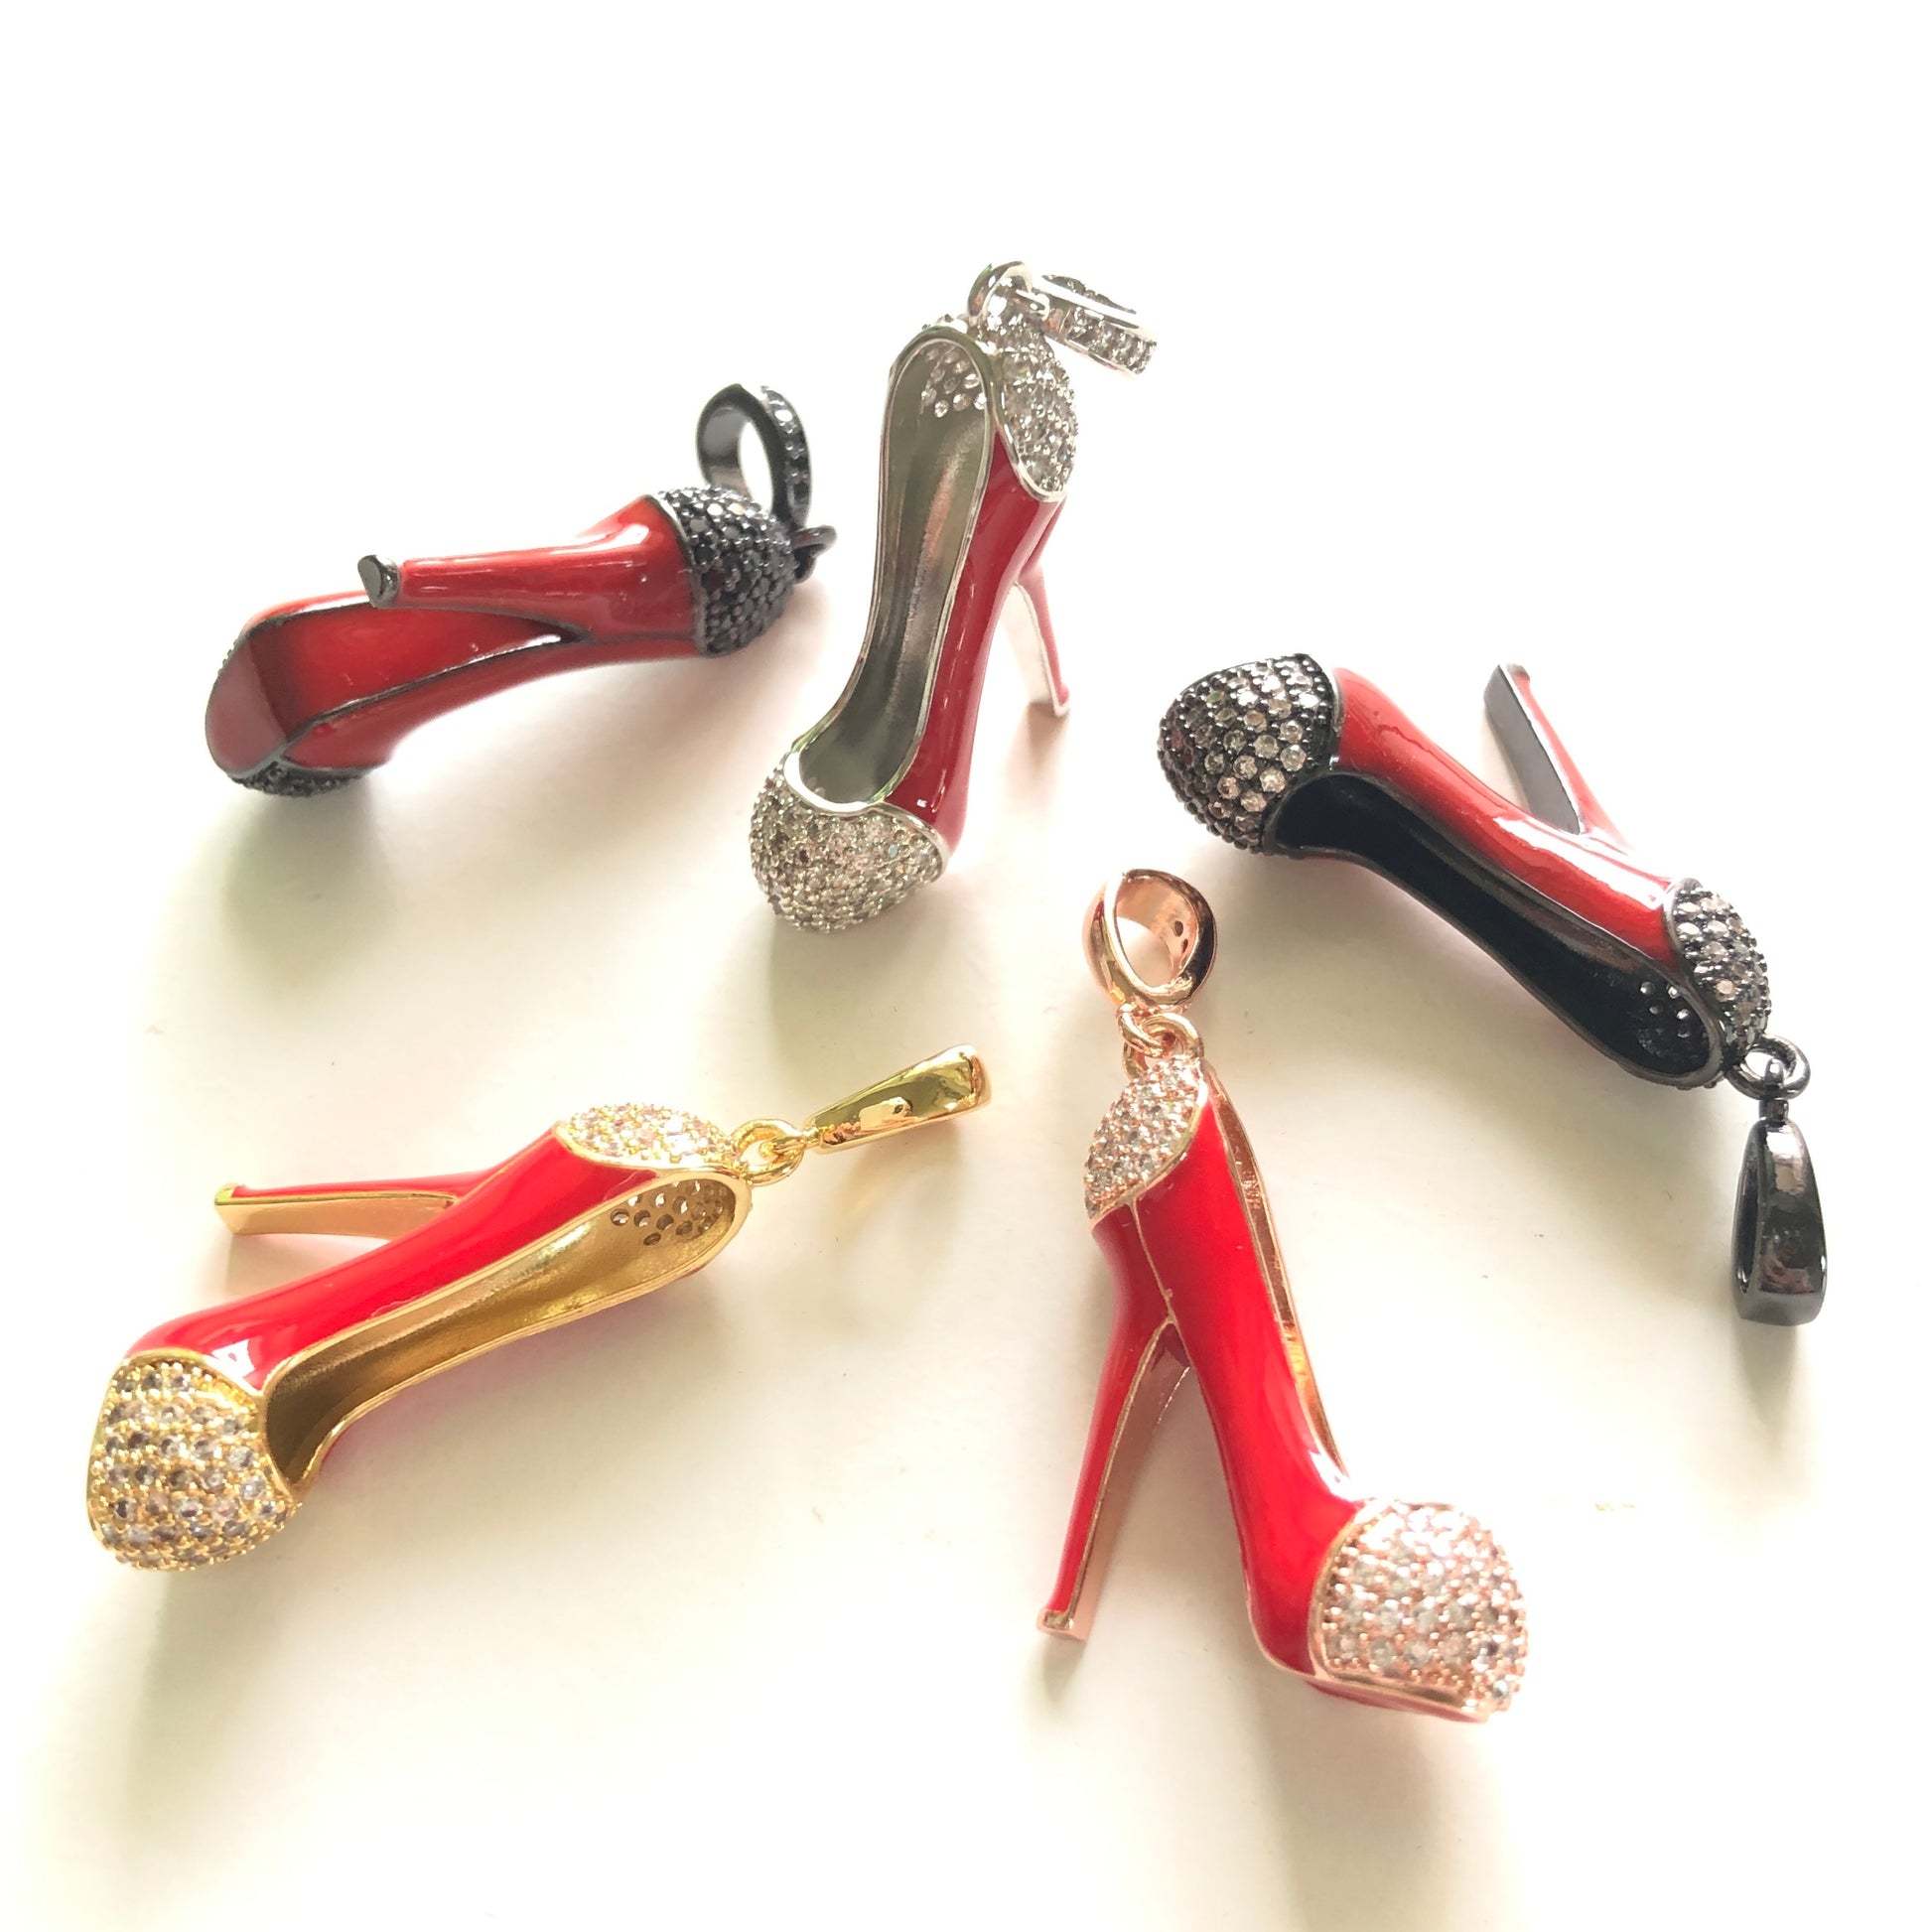 10pcs/lot 30*26mm CZ Paved Red High Heel Shoe Charms CZ Paved Charms High Heels On Sale Charms Beads Beyond